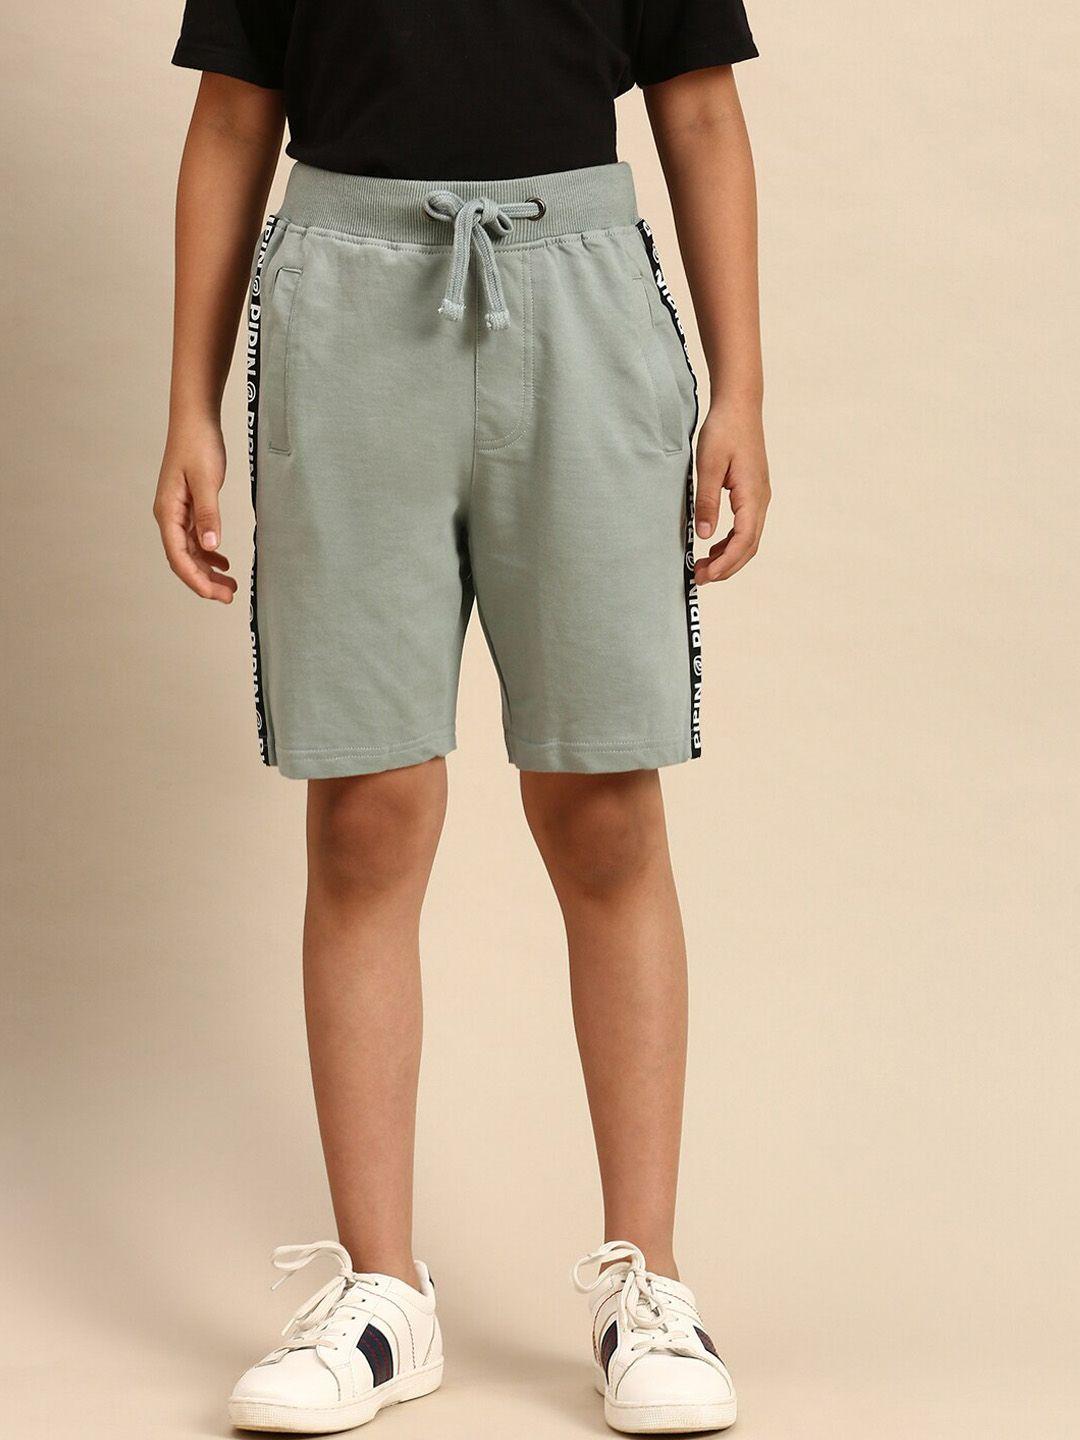 pipin boys grey typography printed pure cotton shorts